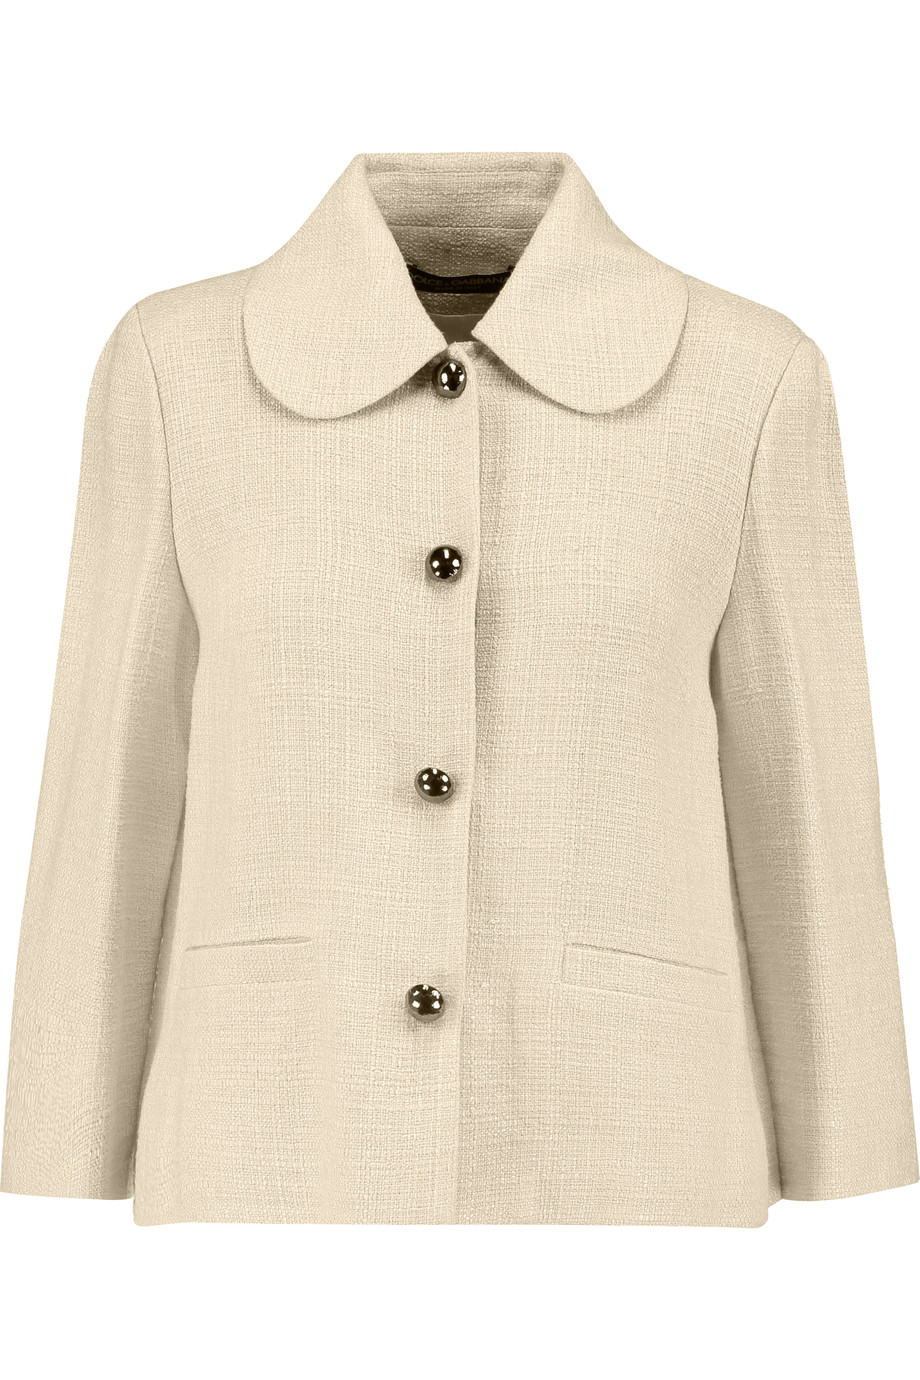 Dolce & Gabbana Cropped Woven Jacket | ModeSens